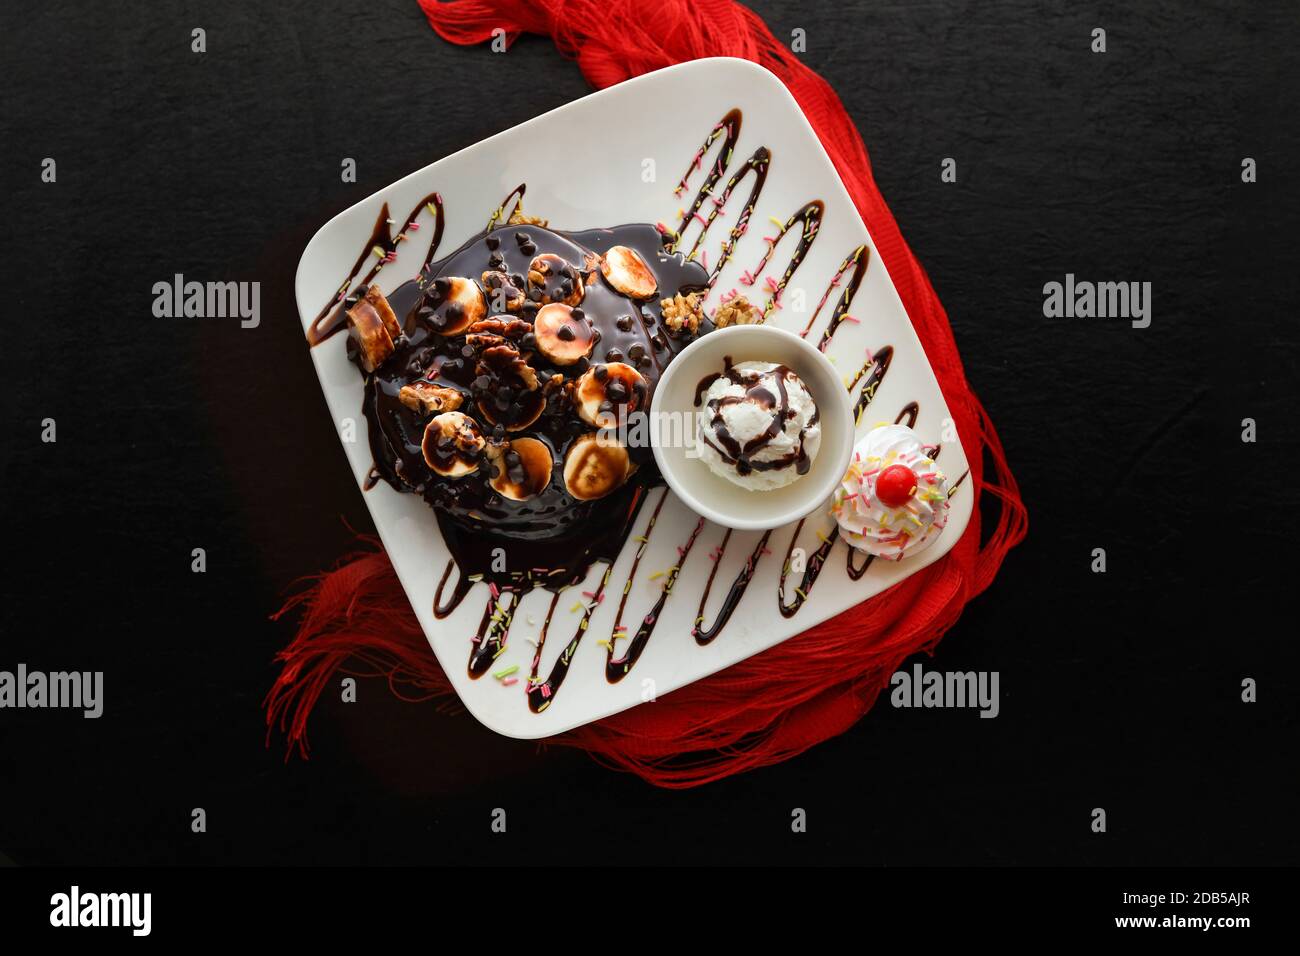 Chocolate banana Panake with ice cream Stock Photo